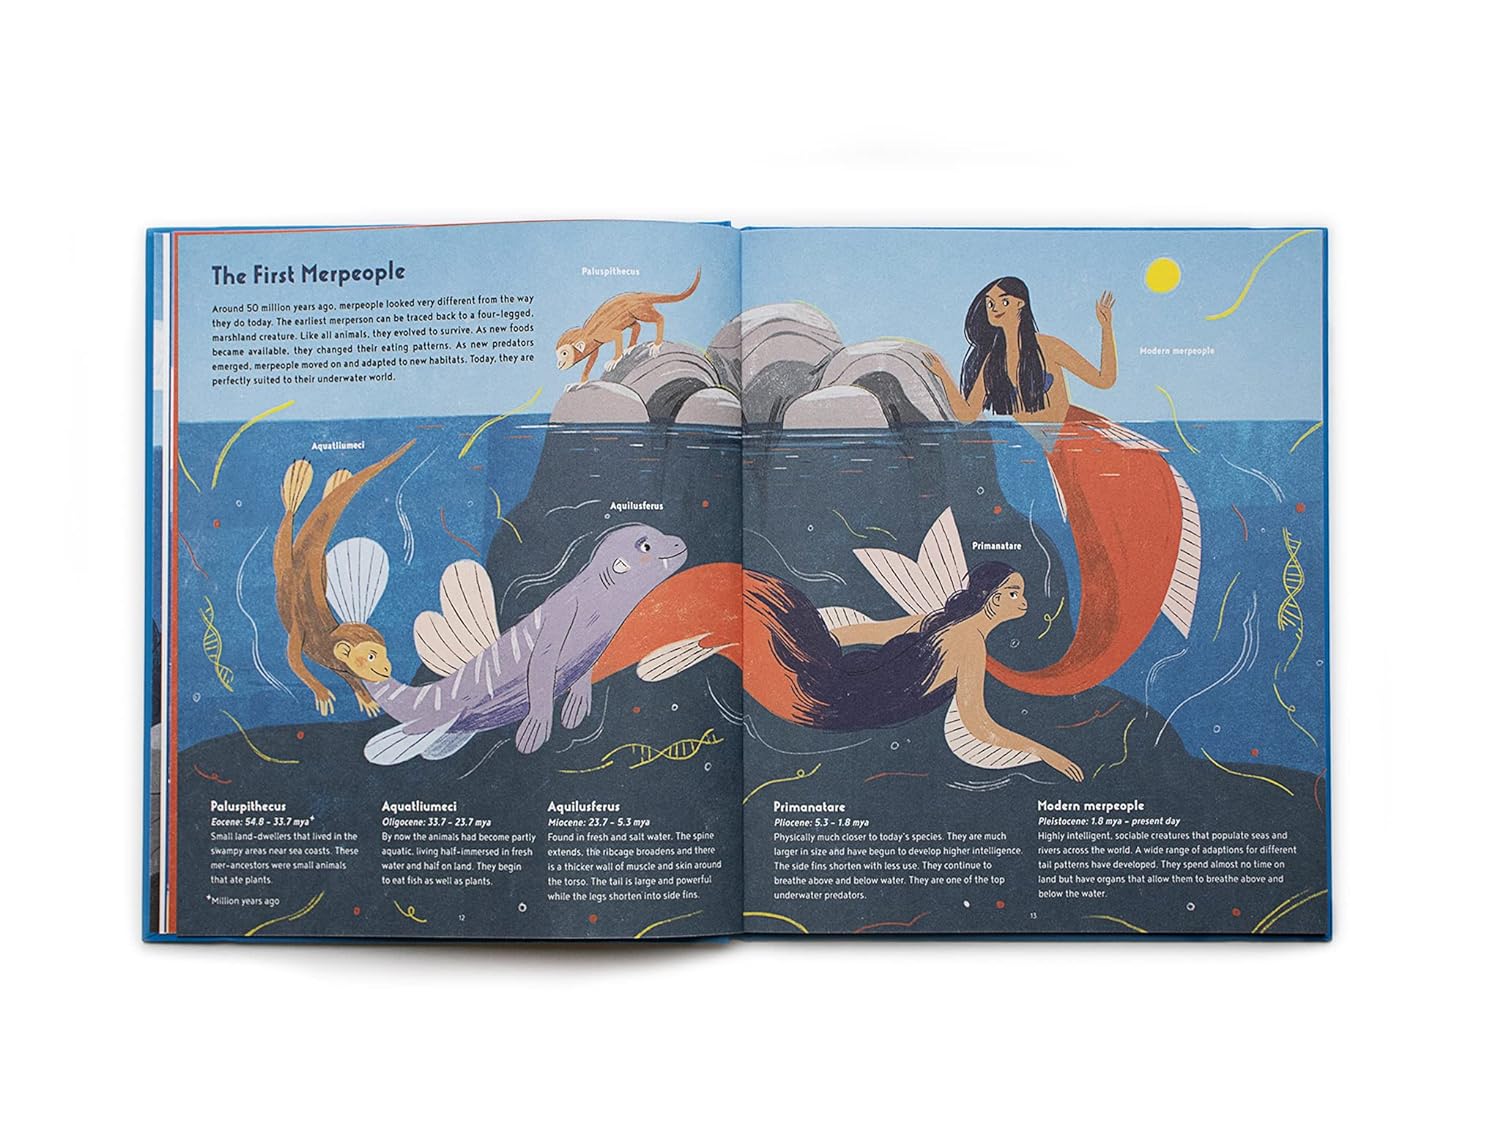 The Secret Lives of Mermaids